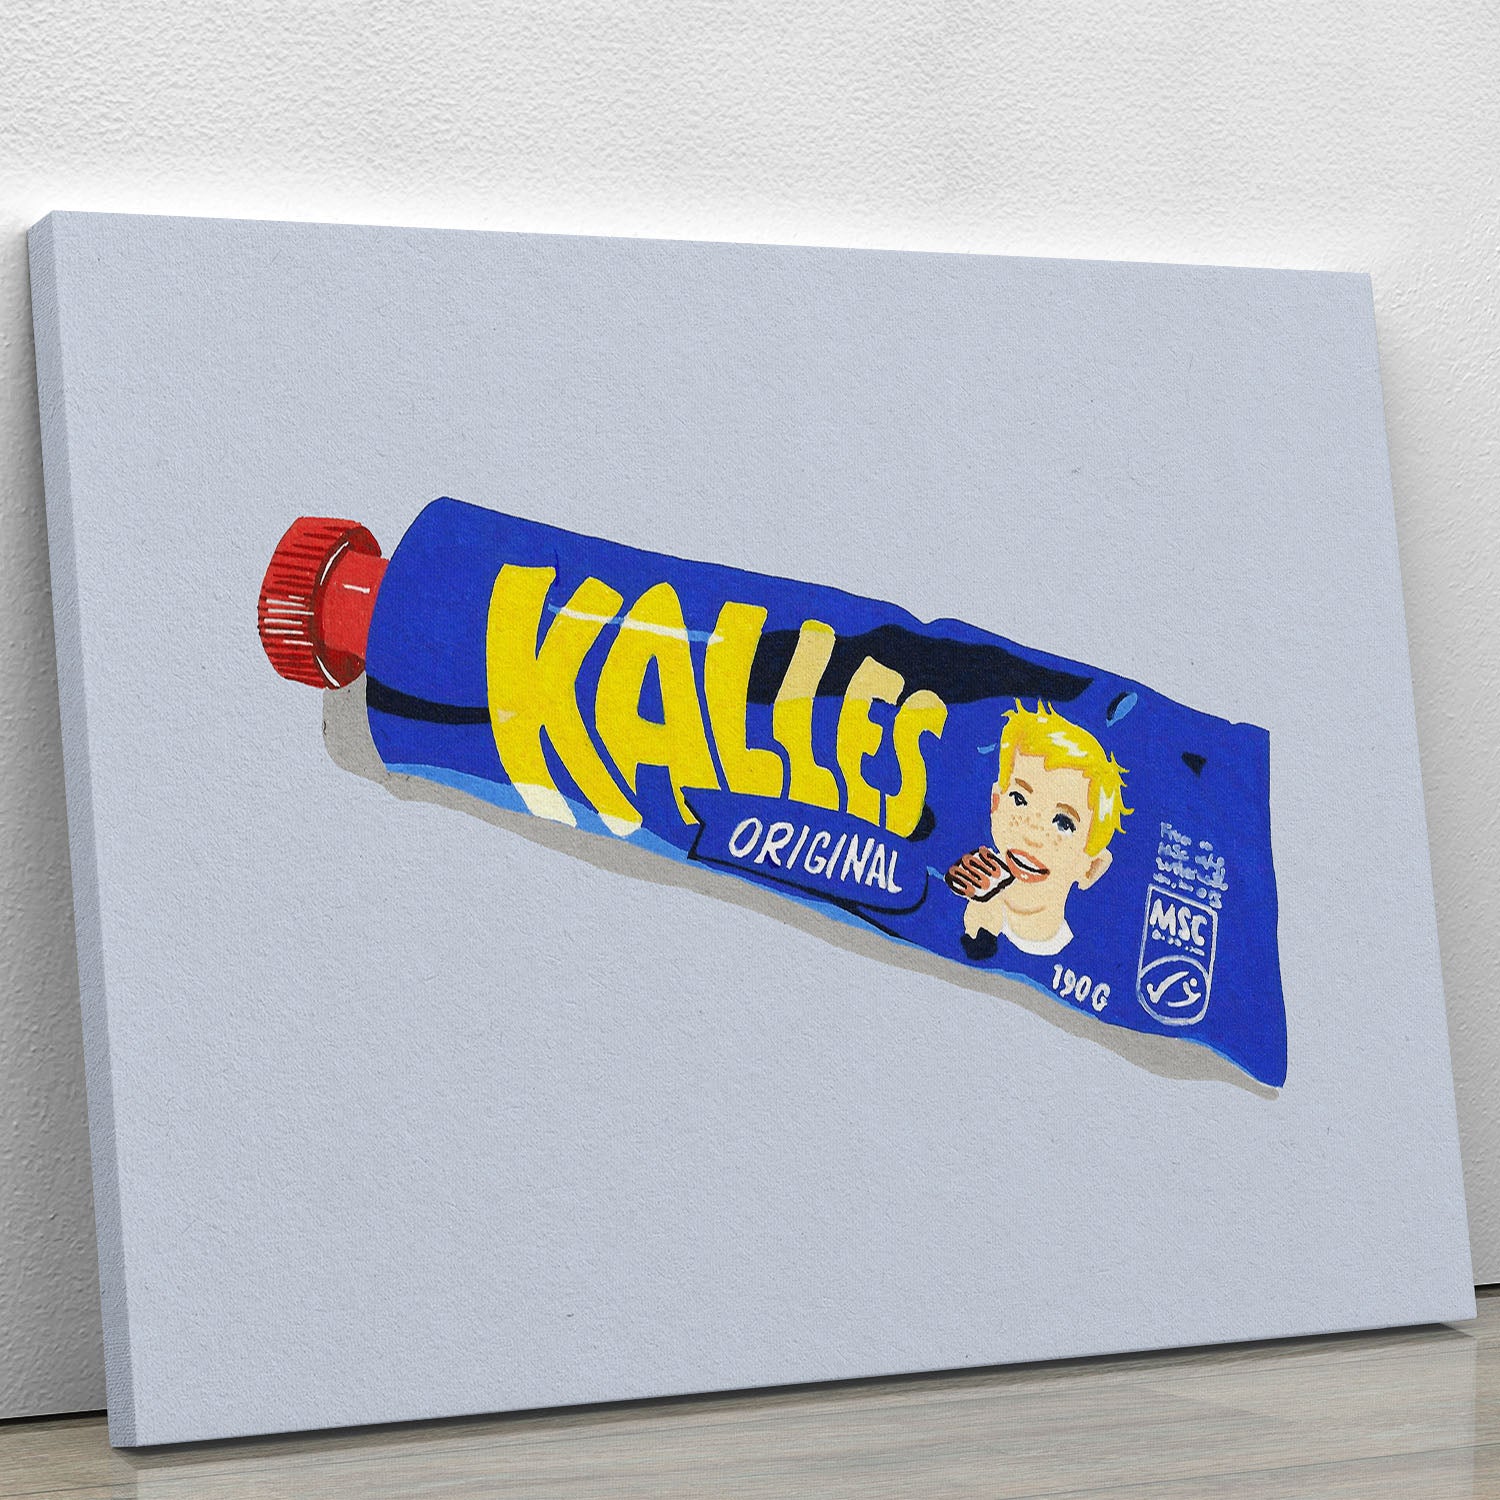 Kalles Original Canvas Print or Poster - Canvas Art Rocks - 1